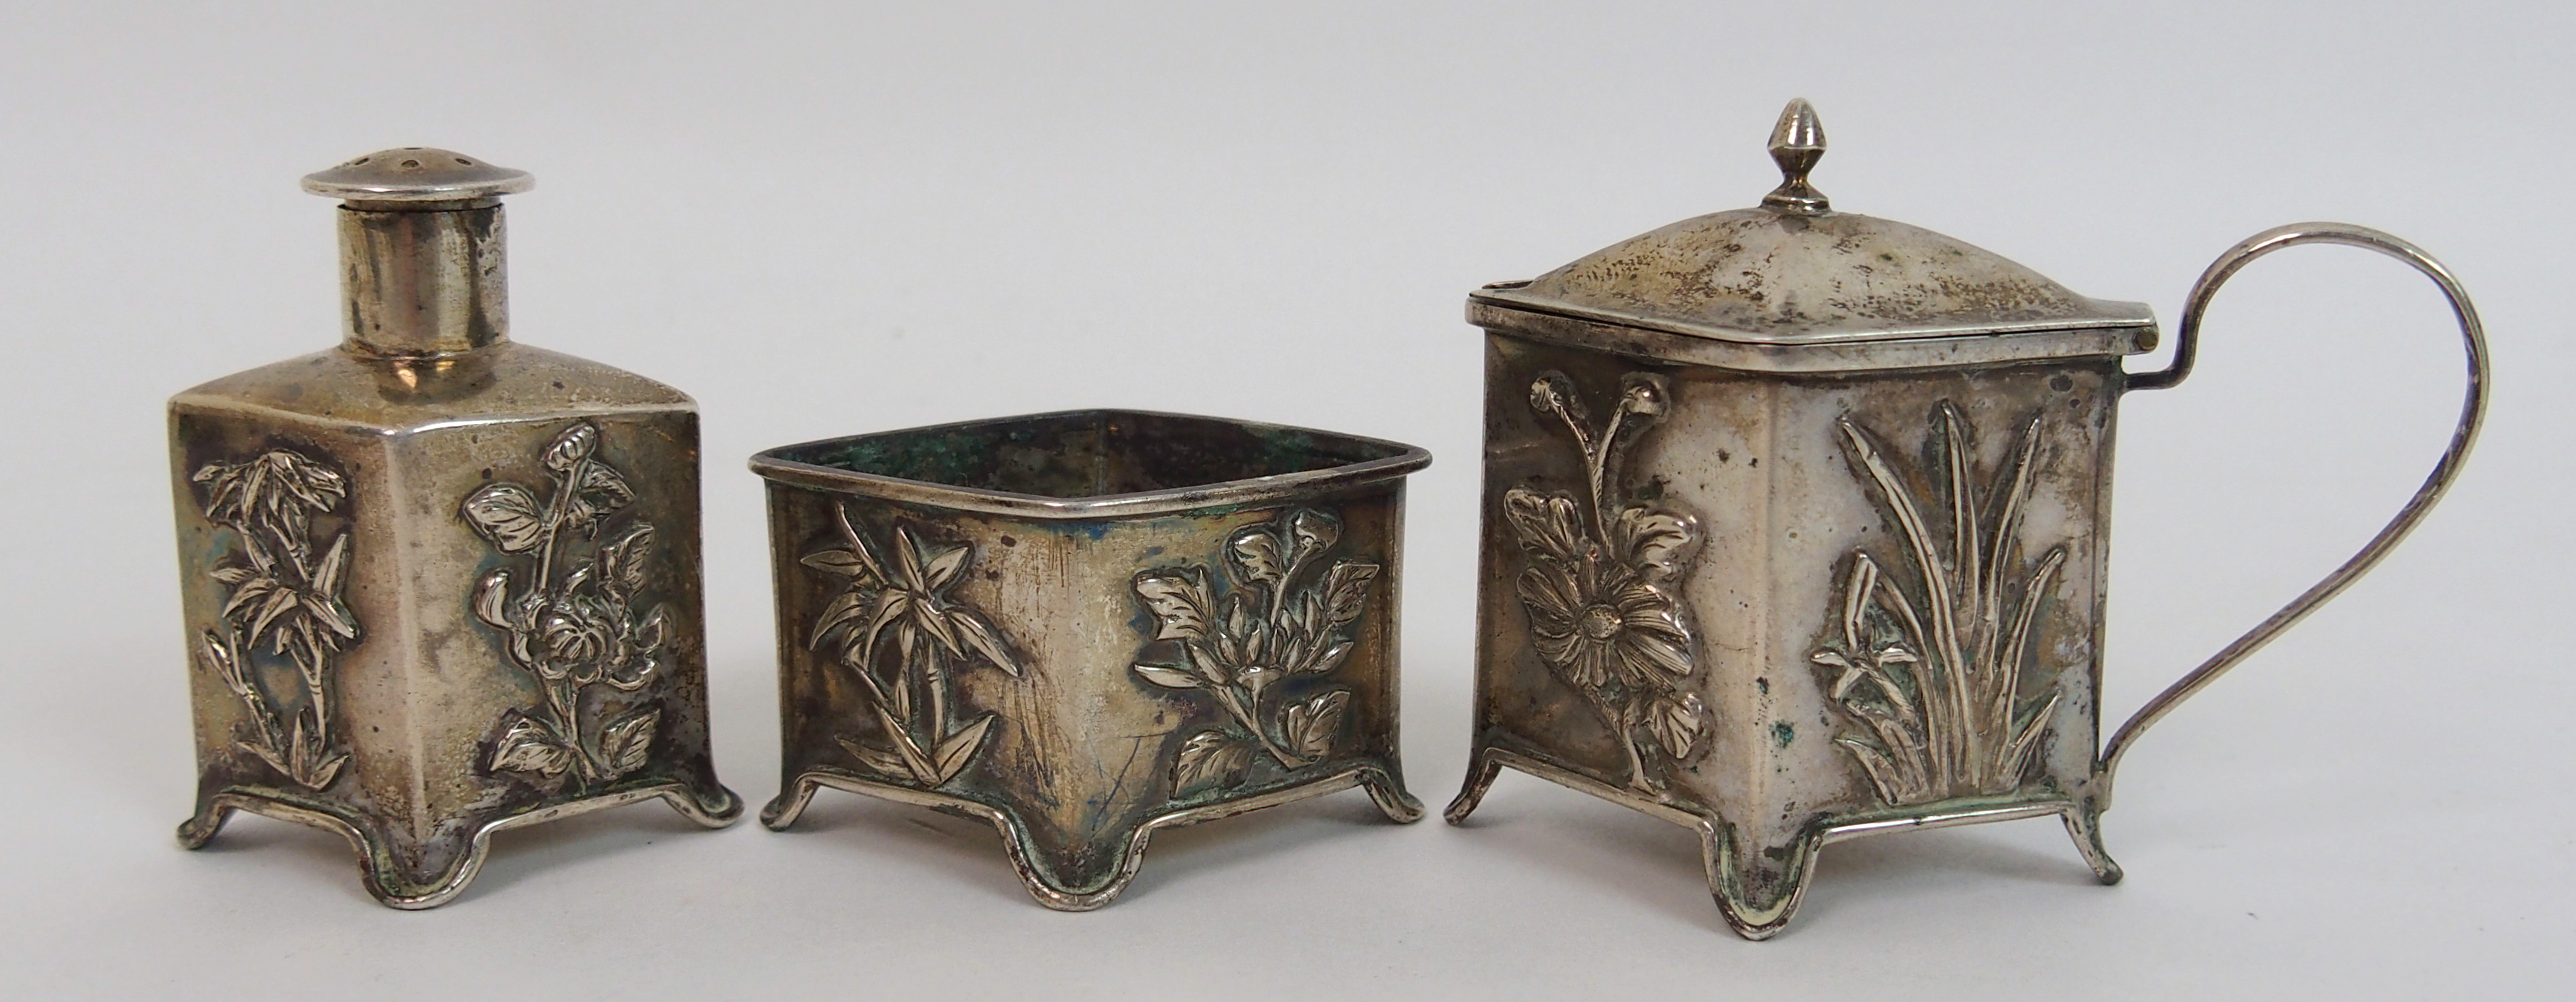 A Chinese silver cruet set cast with foliage comprising; salt cellar, pepper pot and mustard pot (